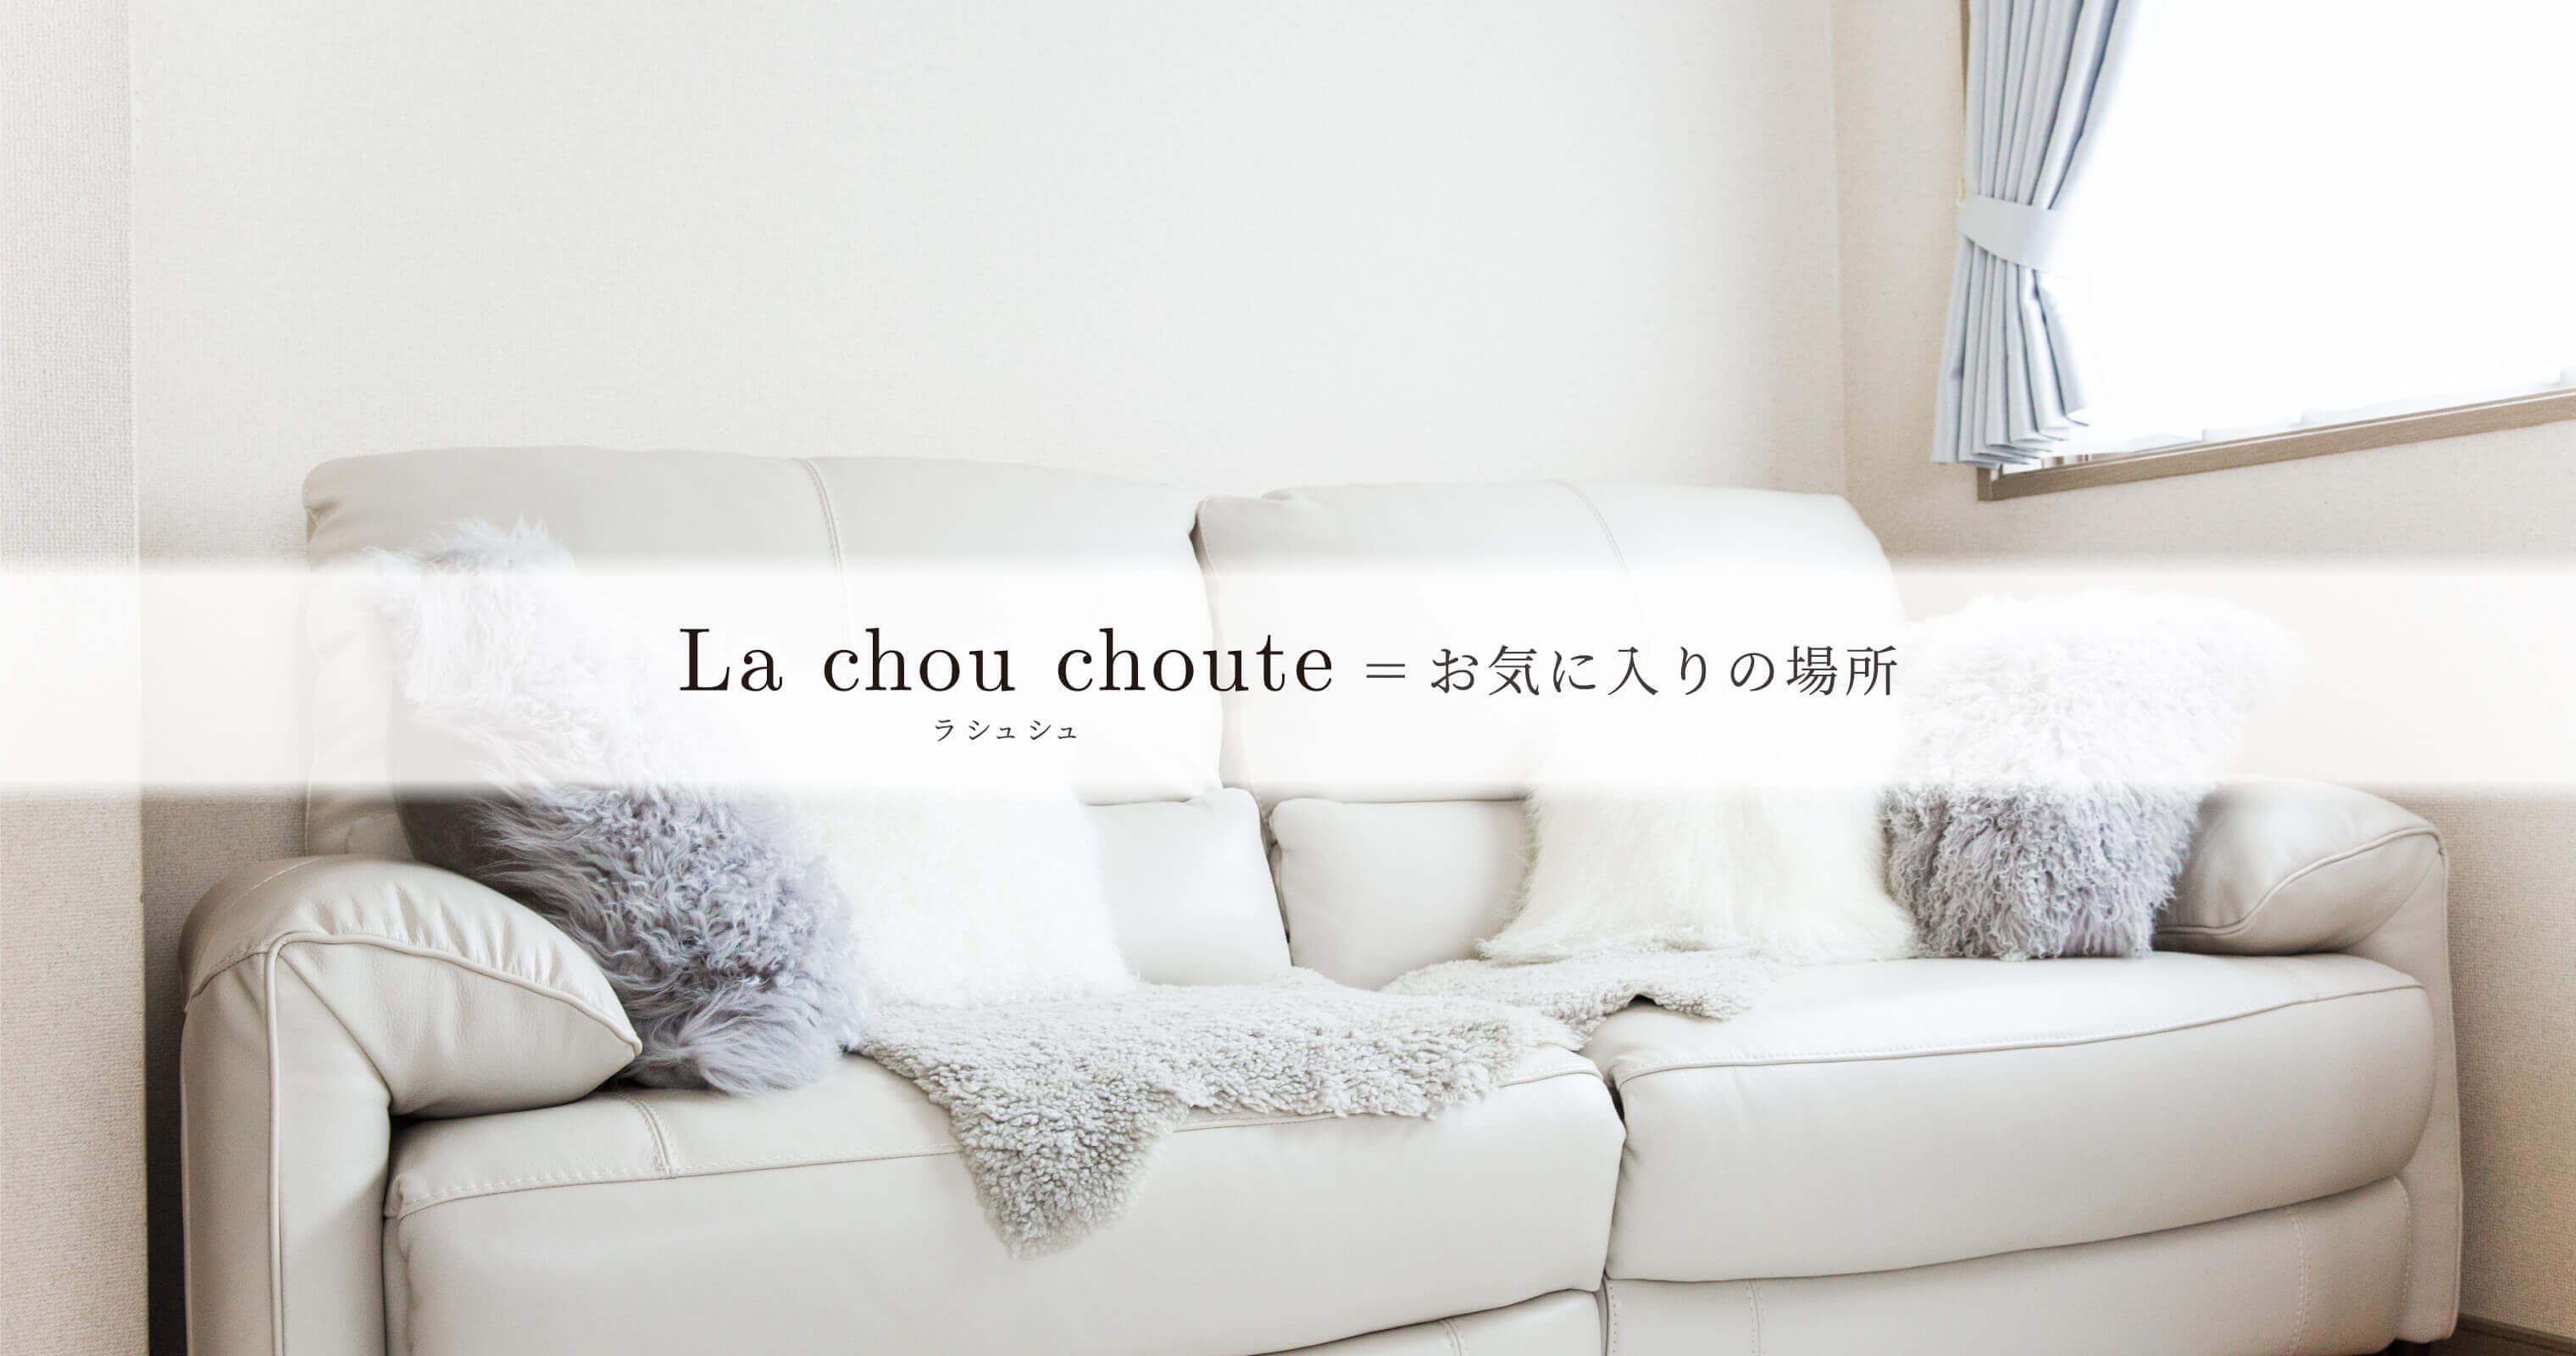 La chou choute（ラシュシュ）＝お気に入りの場所